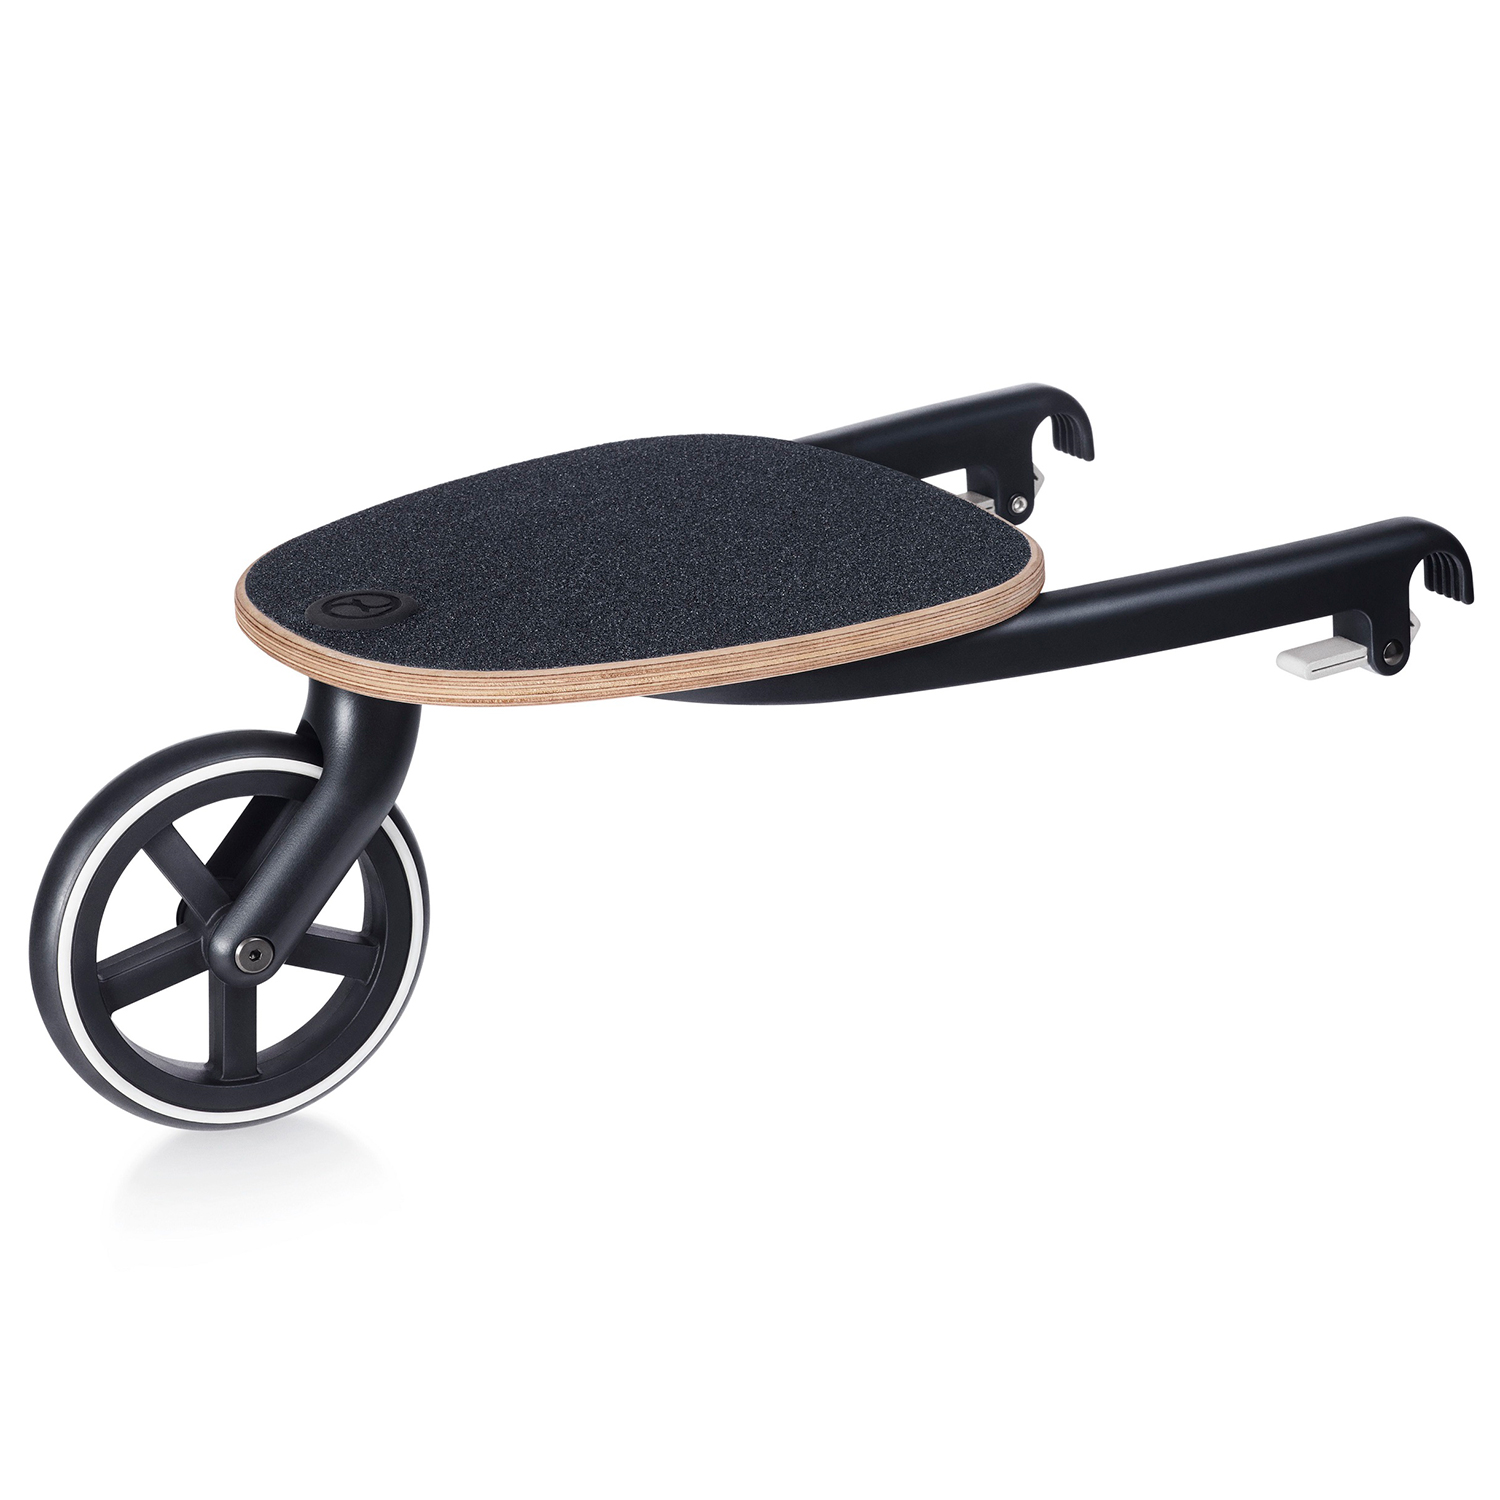 Подножка для старшего ребёнка к коляске Cybex Priam, Balios S 2019 cybex подножка для старшего ребёнка к коляске priam balios s 2019